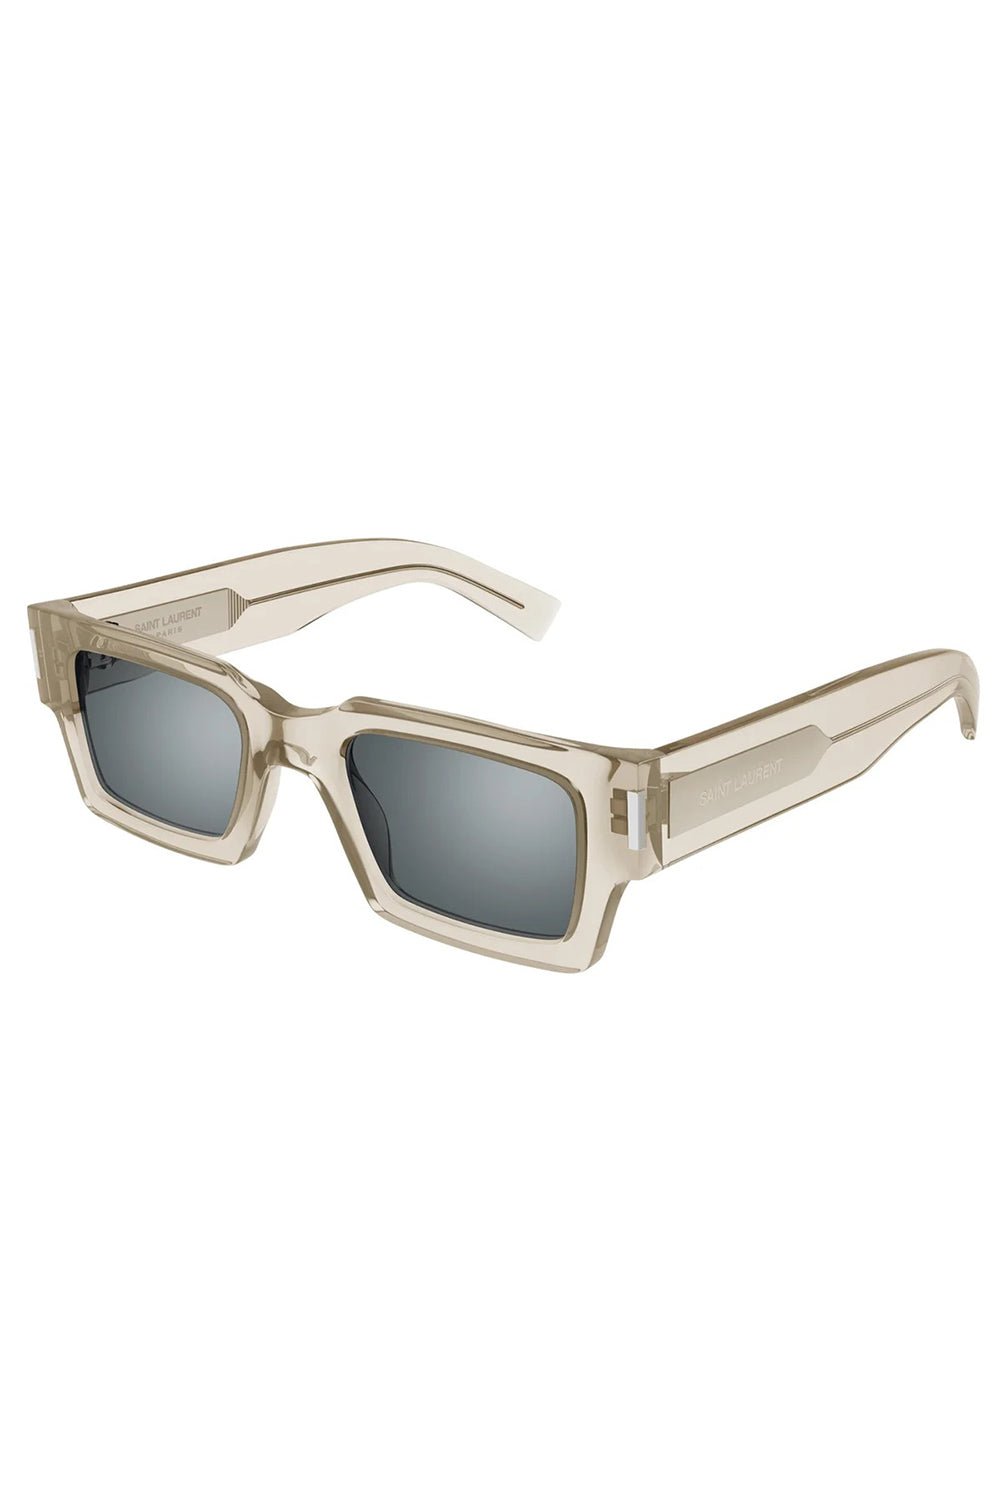 SAINT LAURENT-Rectangular Sunglasses - Beige-BEIGE/BEIGE/SILVER